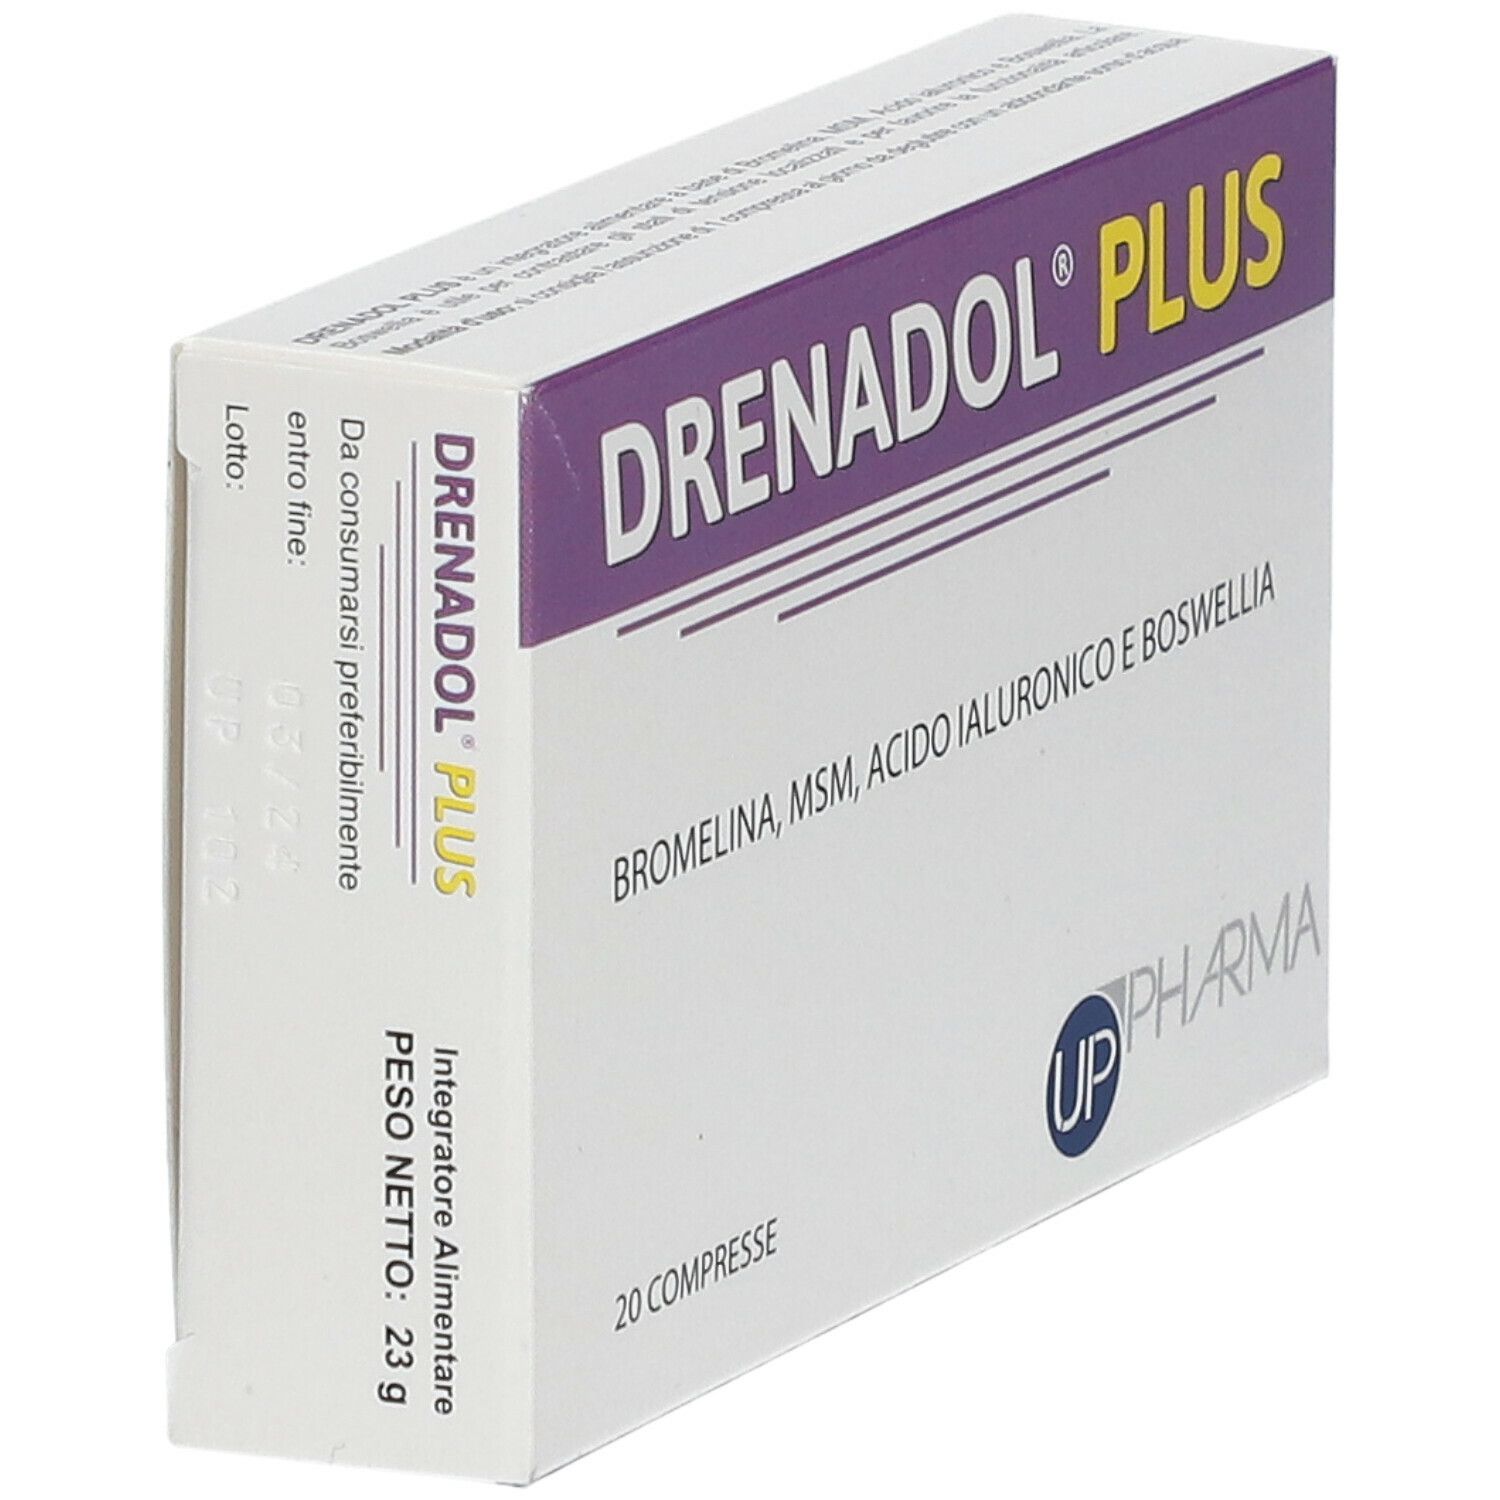 Drenadol® Plus